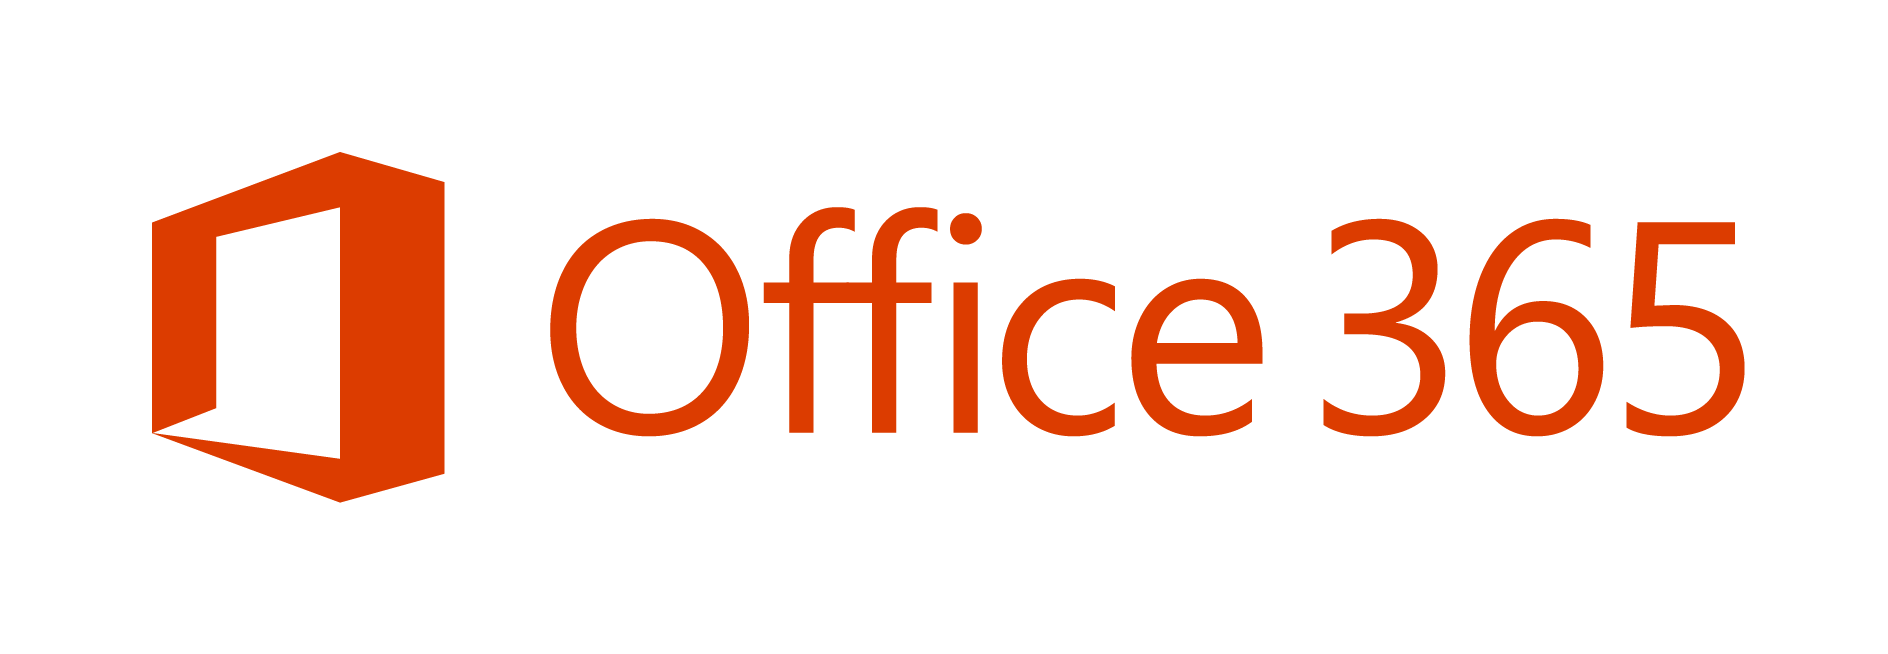 office 365 logo integration on a black background.